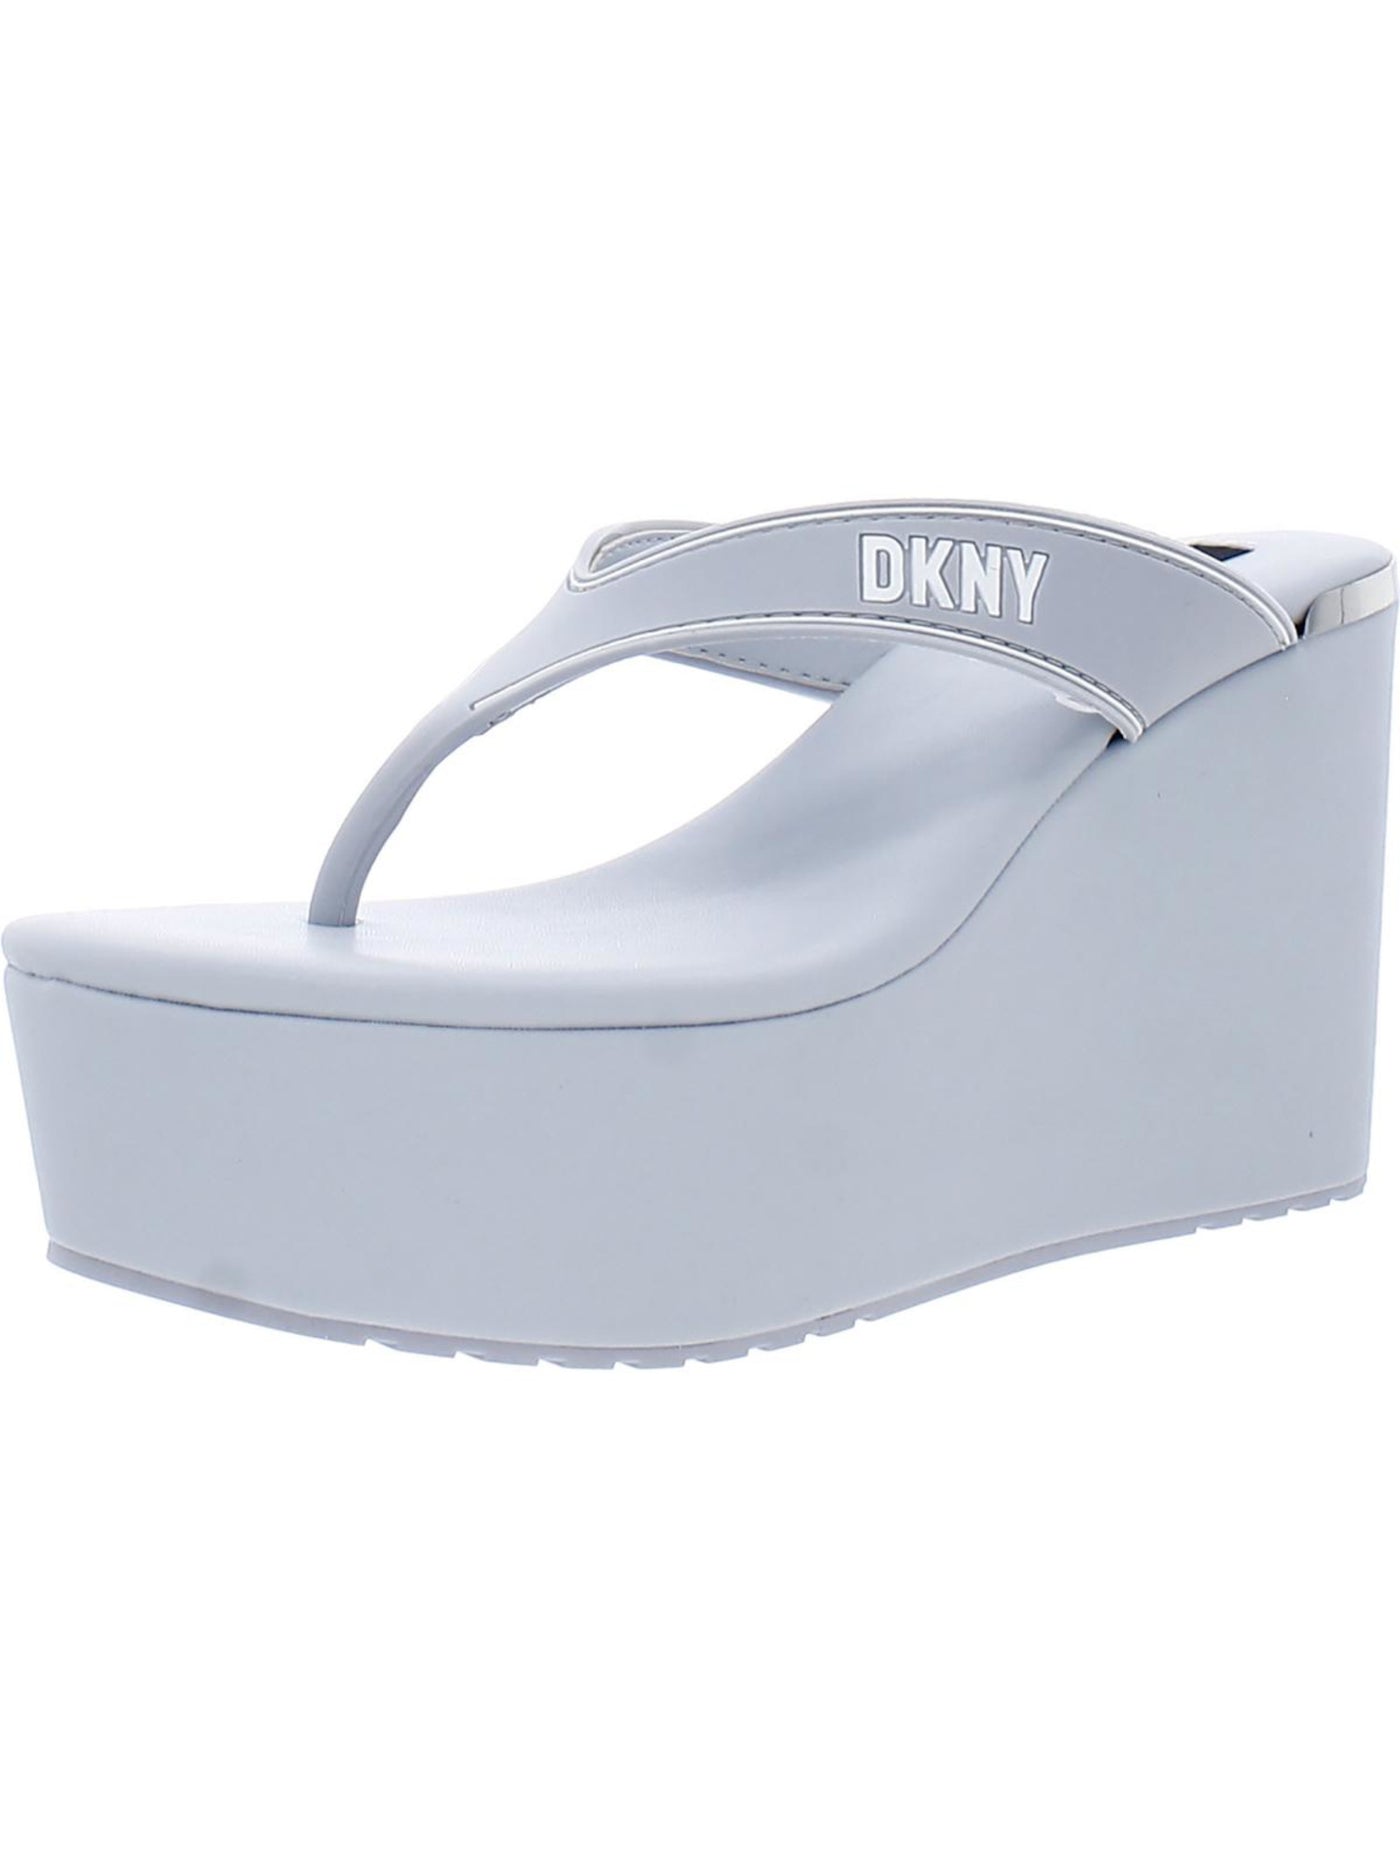 DKNY Womens Light Blue Metallic 2" Platform Padded Trina Round Toe Wedge Slip On Thong Sandals Shoes 8 M